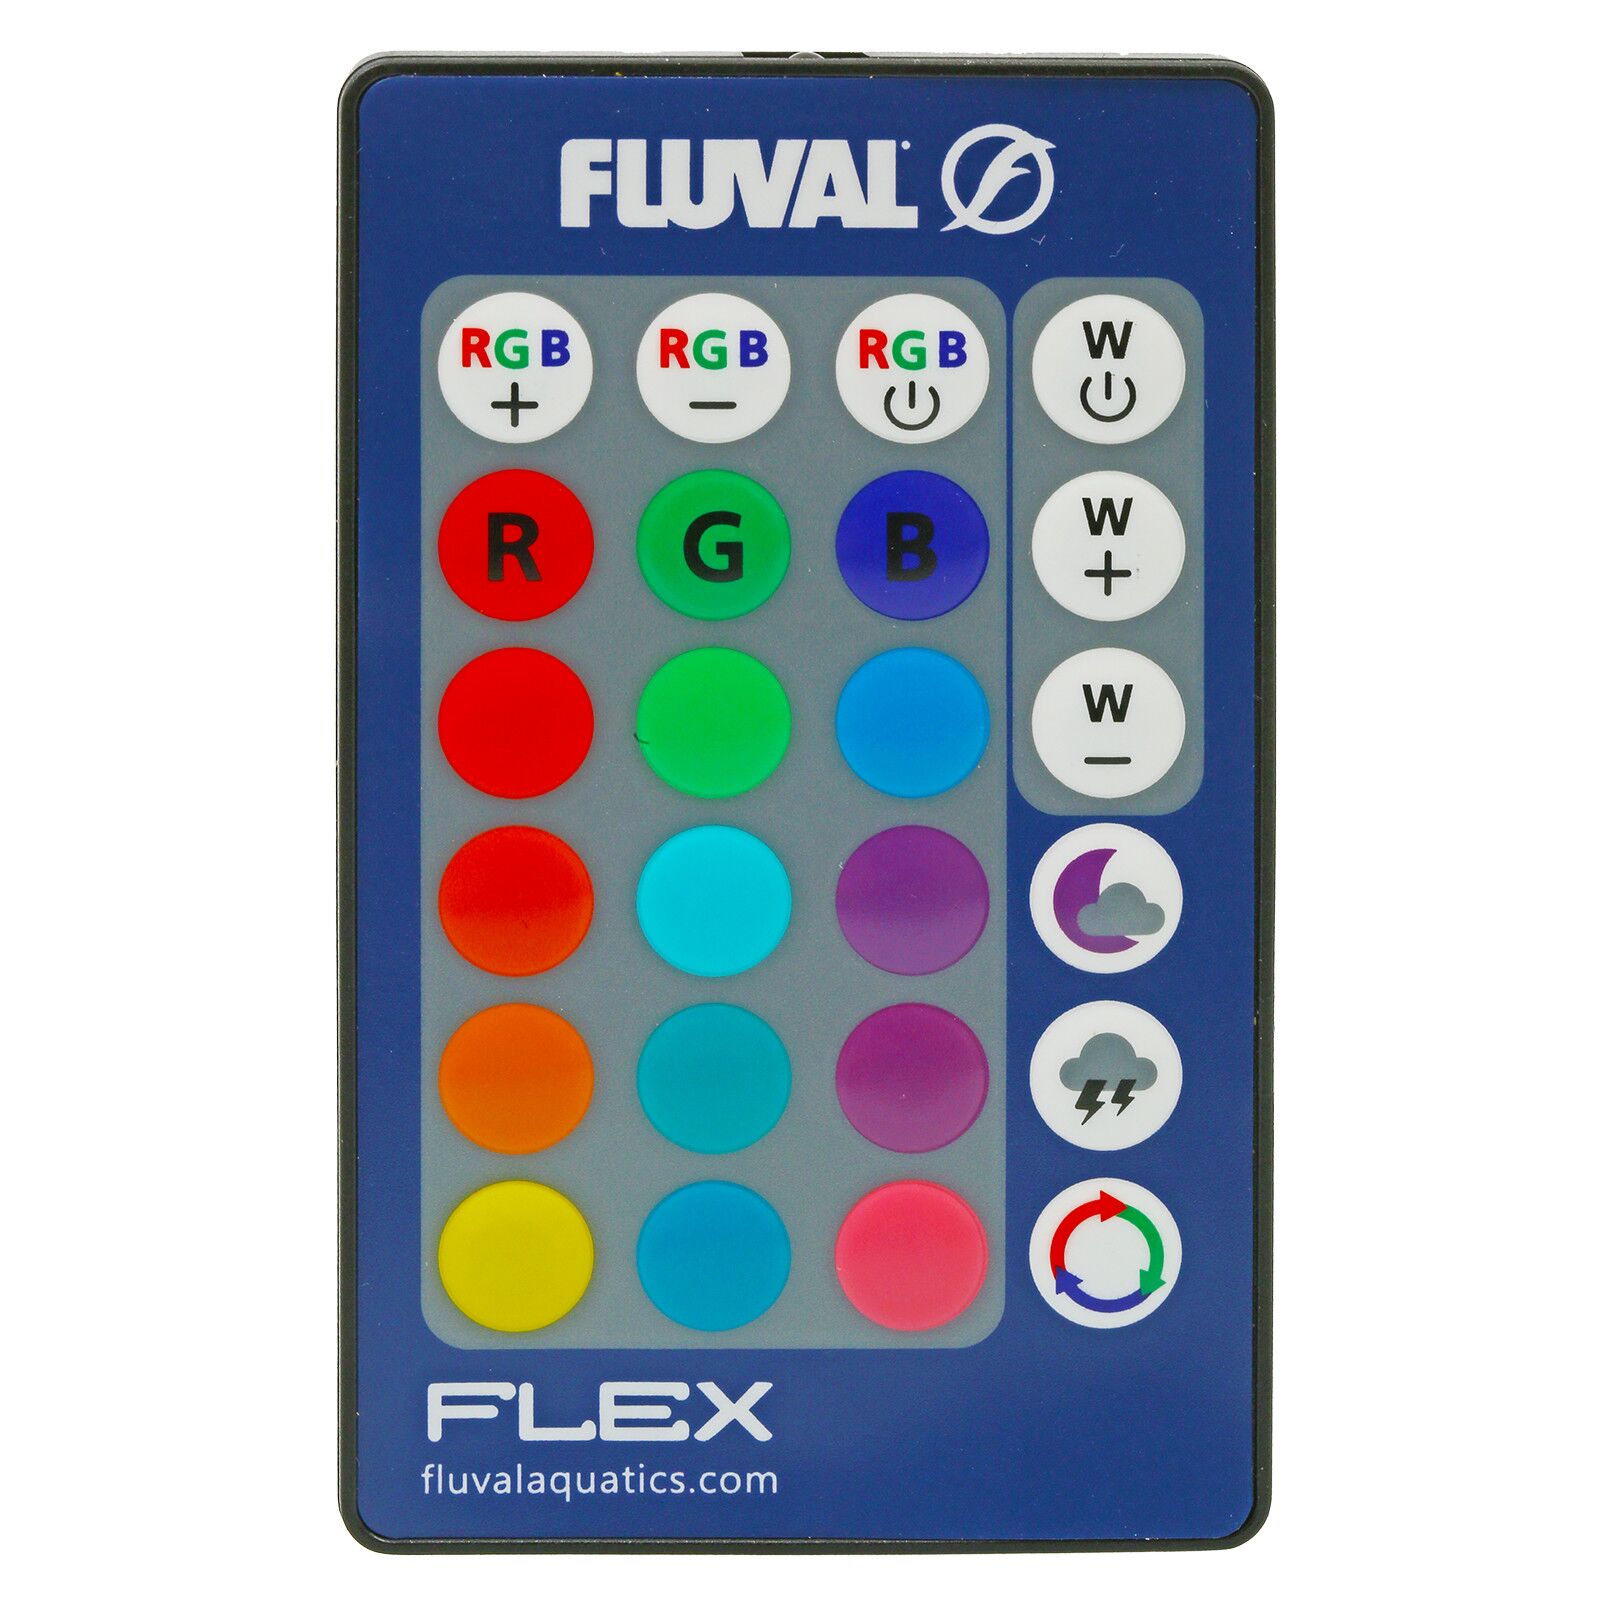 Fluval - Flex Replacement Remote Control